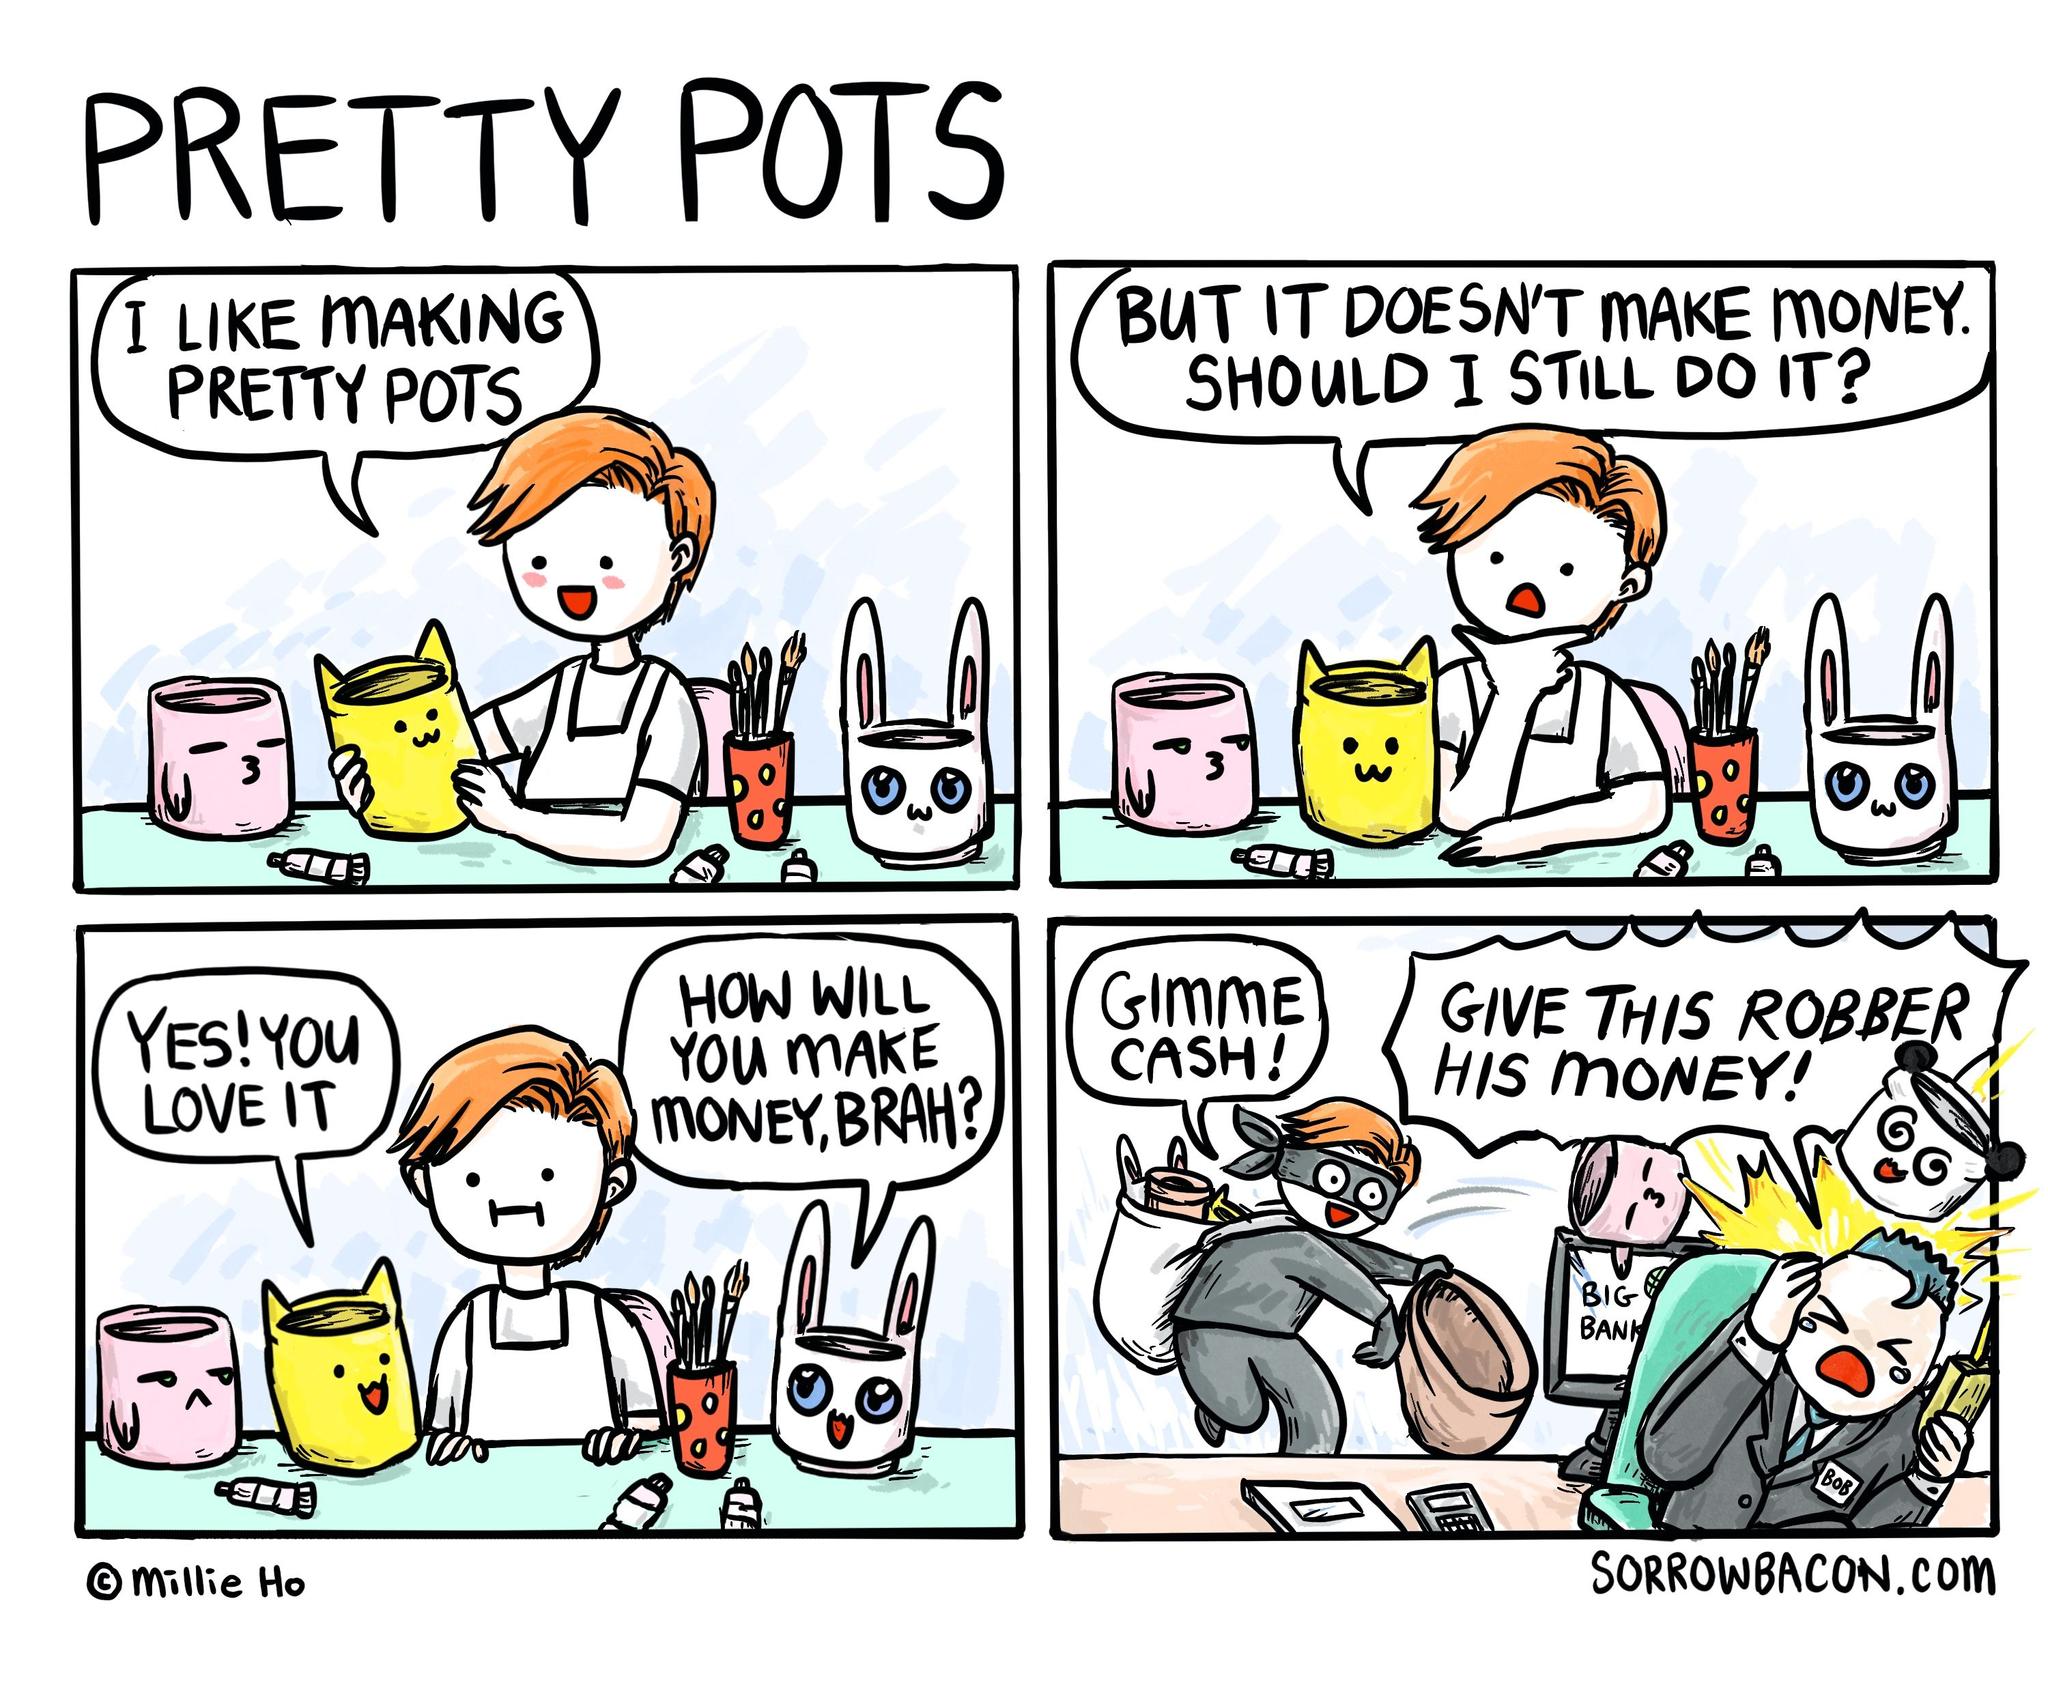 Pretty Pots sorrowbacon comic